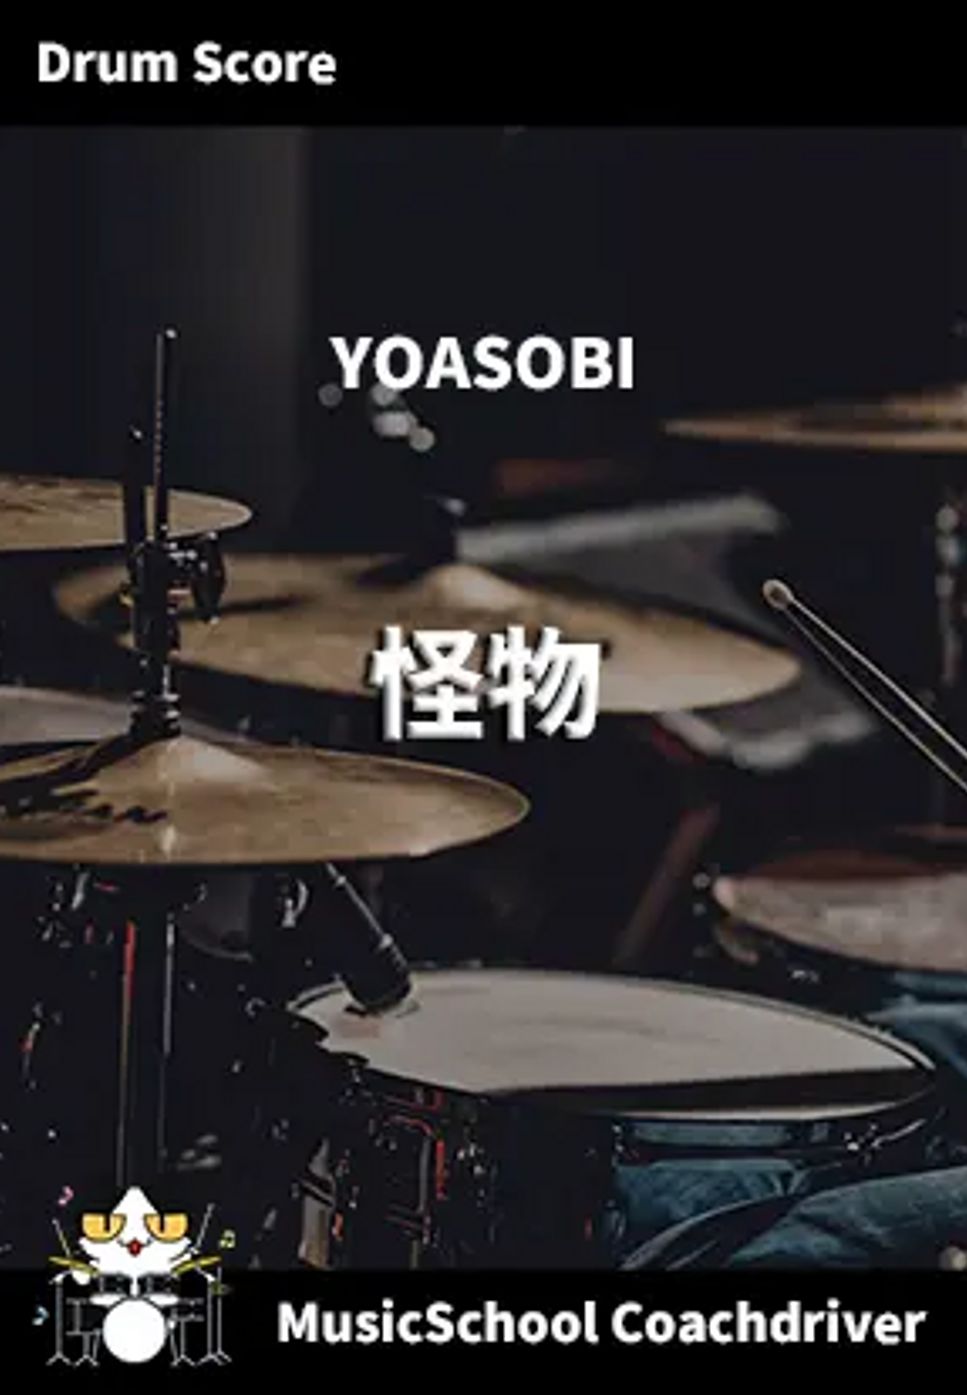 YOASOBI - 怪物 (YOASOBIさんの「怪物」です。 この楽曲はテレビアニメ『BEASTARS』第2期のOPテーマ曲です。) by ハラショー